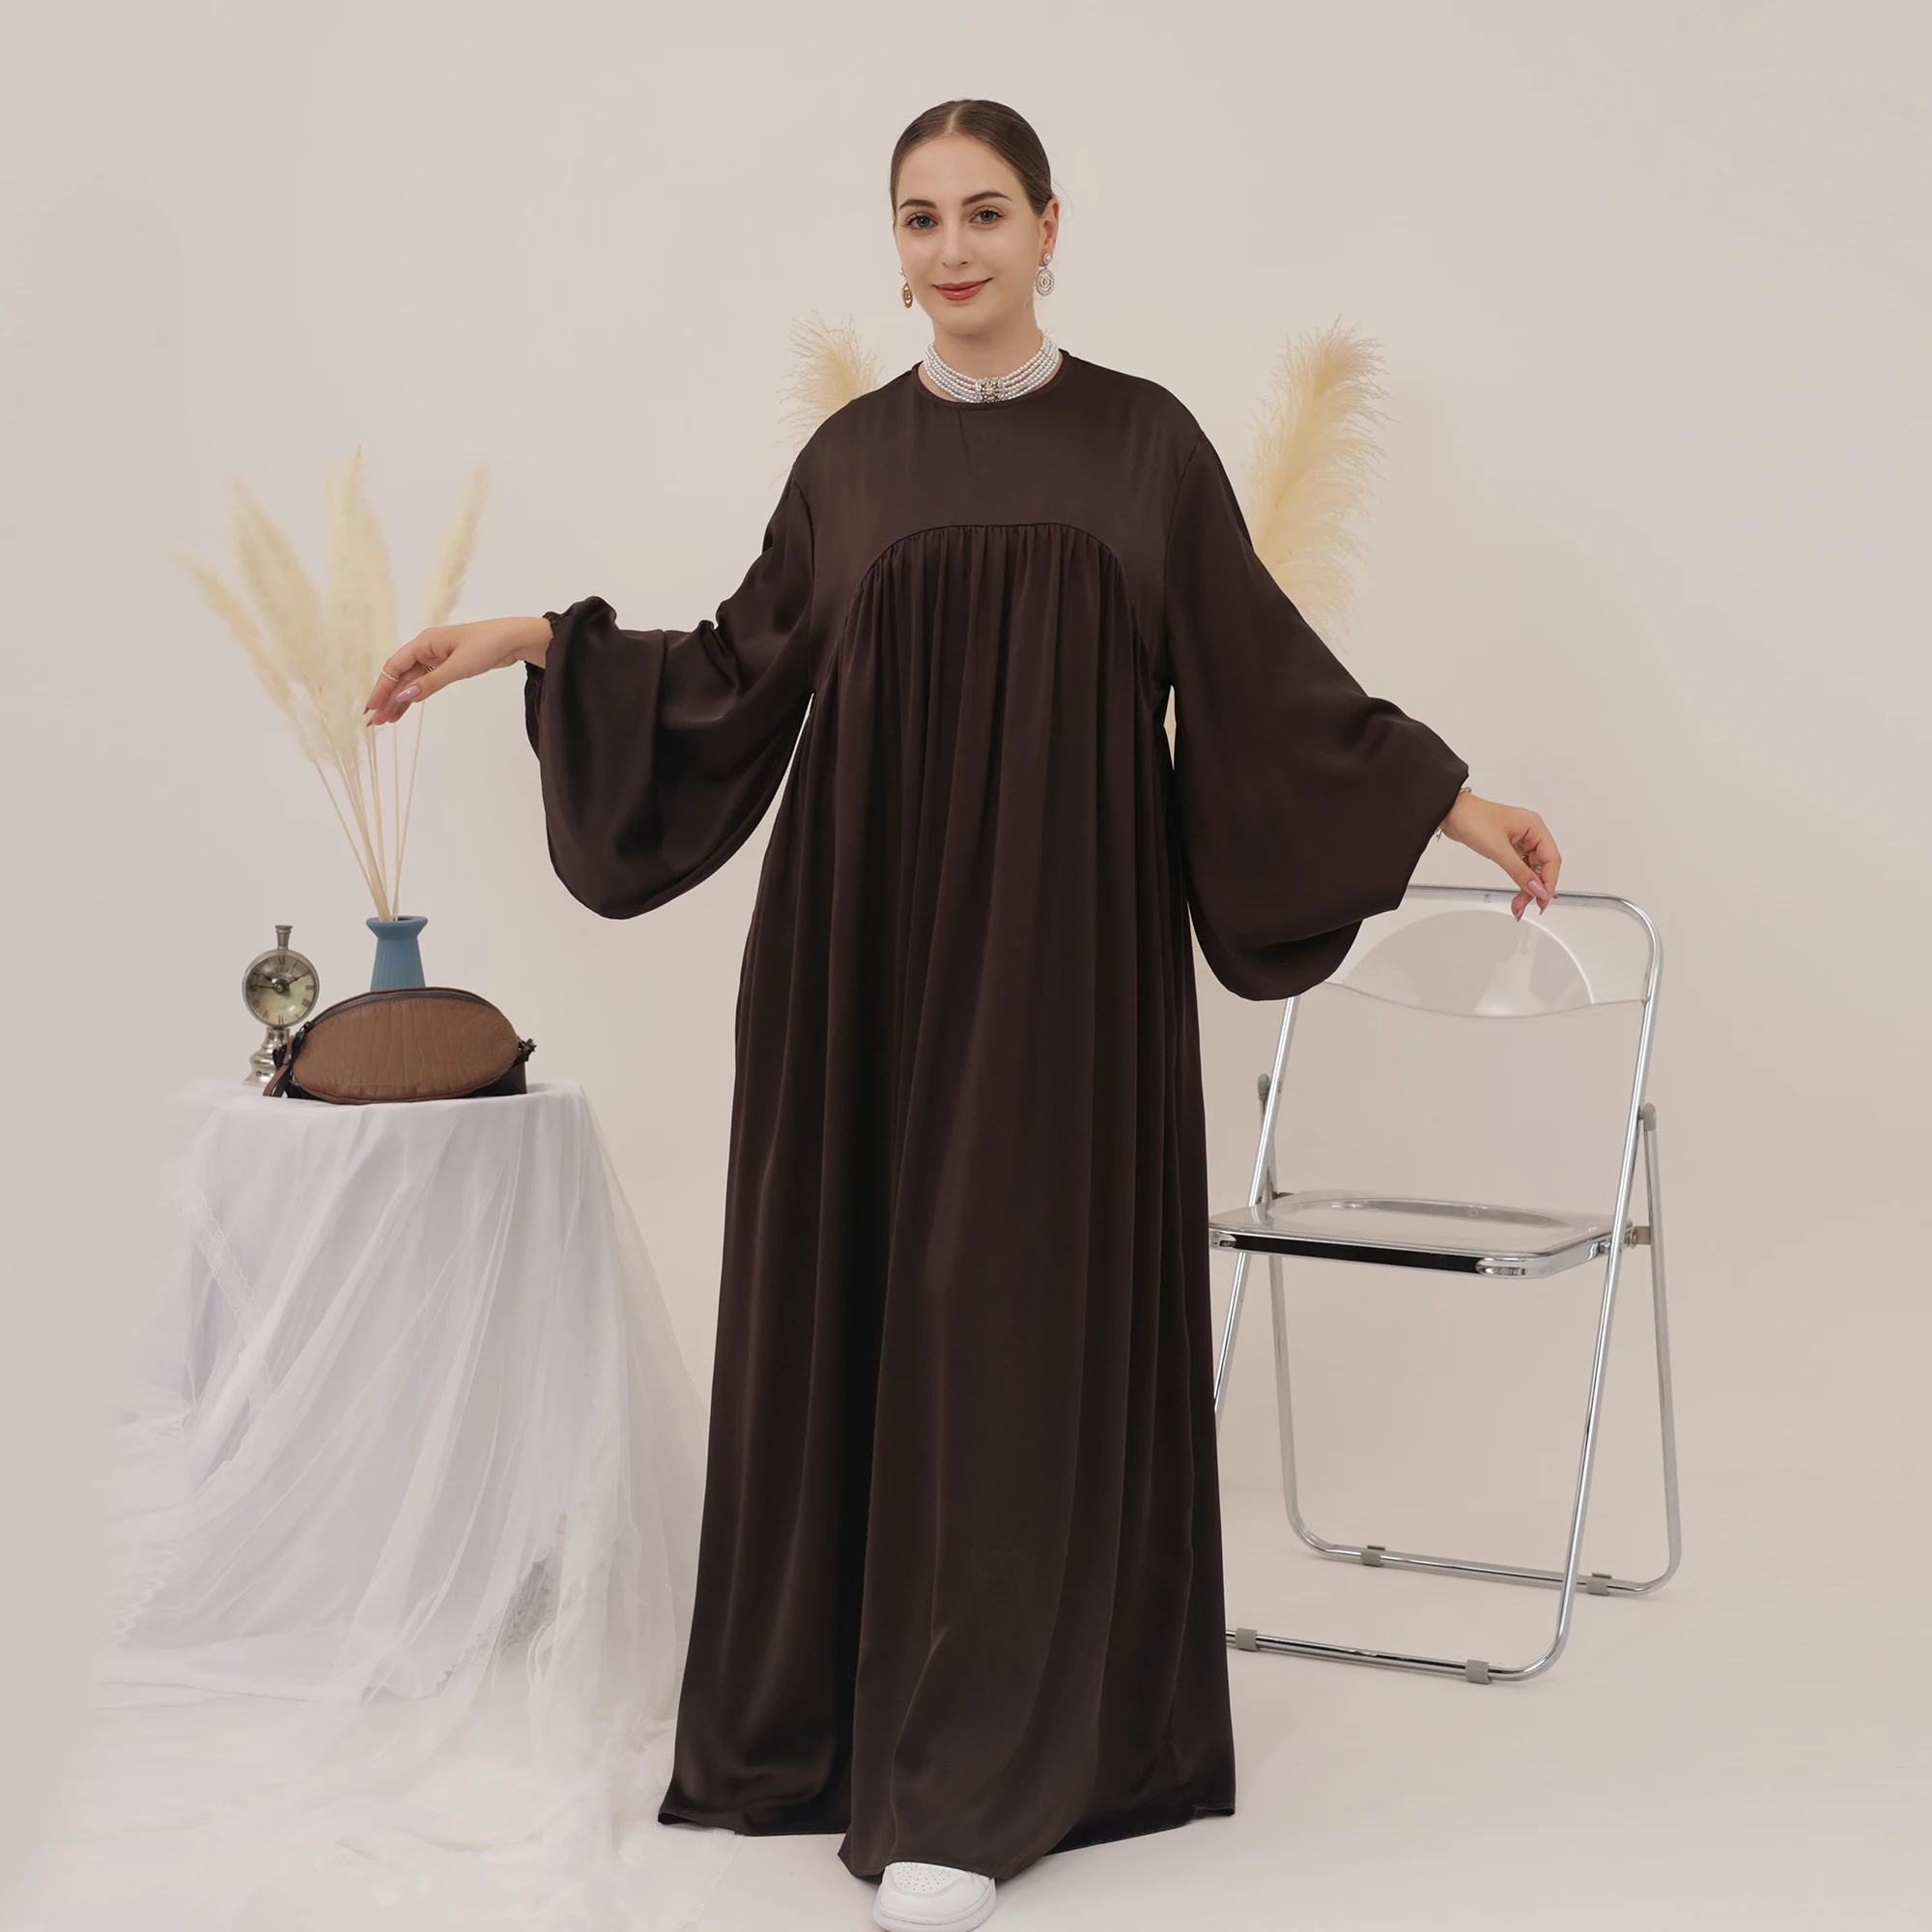 Shimmer Abaya Muslim Dress Loose Style Bishop Sleeves Islam Clothing Casual Women Dubai Hijabi Robe Ramadan Eid Kaftan(No Scarf)